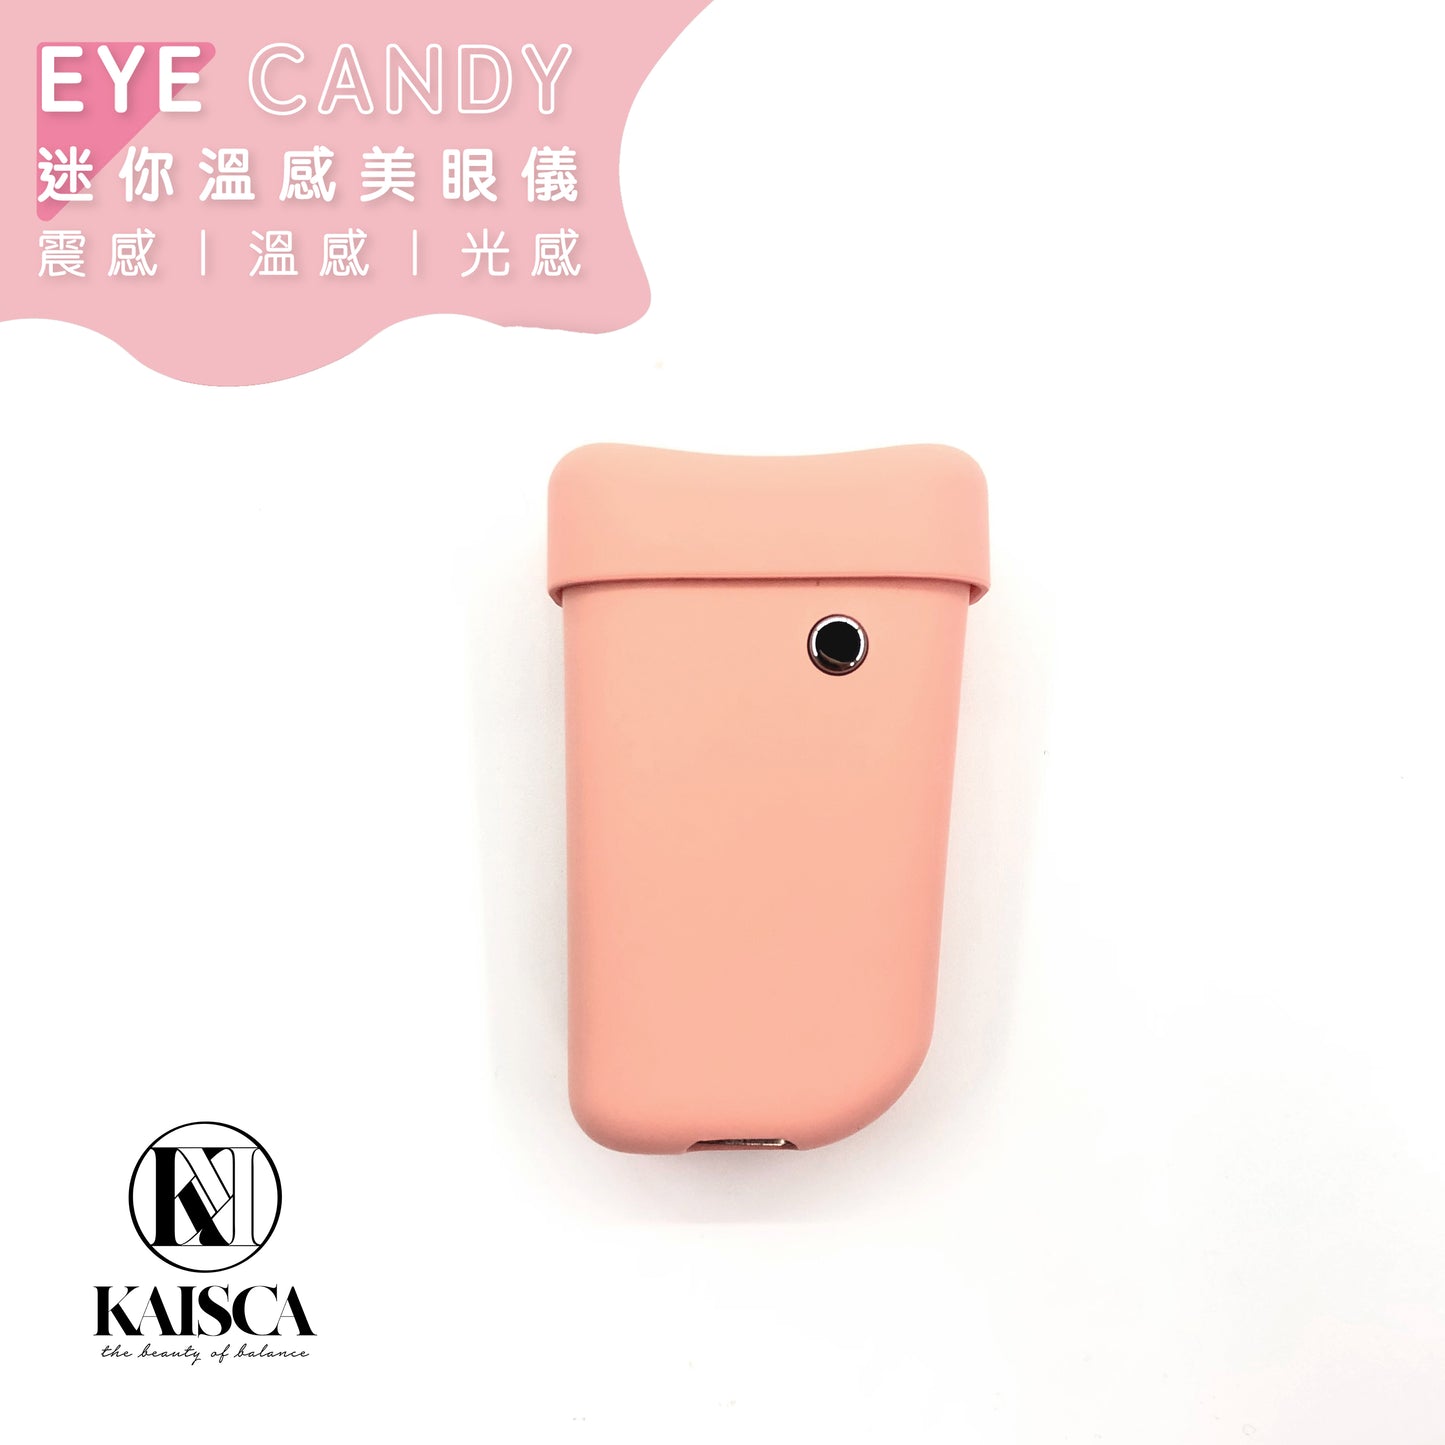 KAISCA - Eye Candy Eye Massager (Coconut).